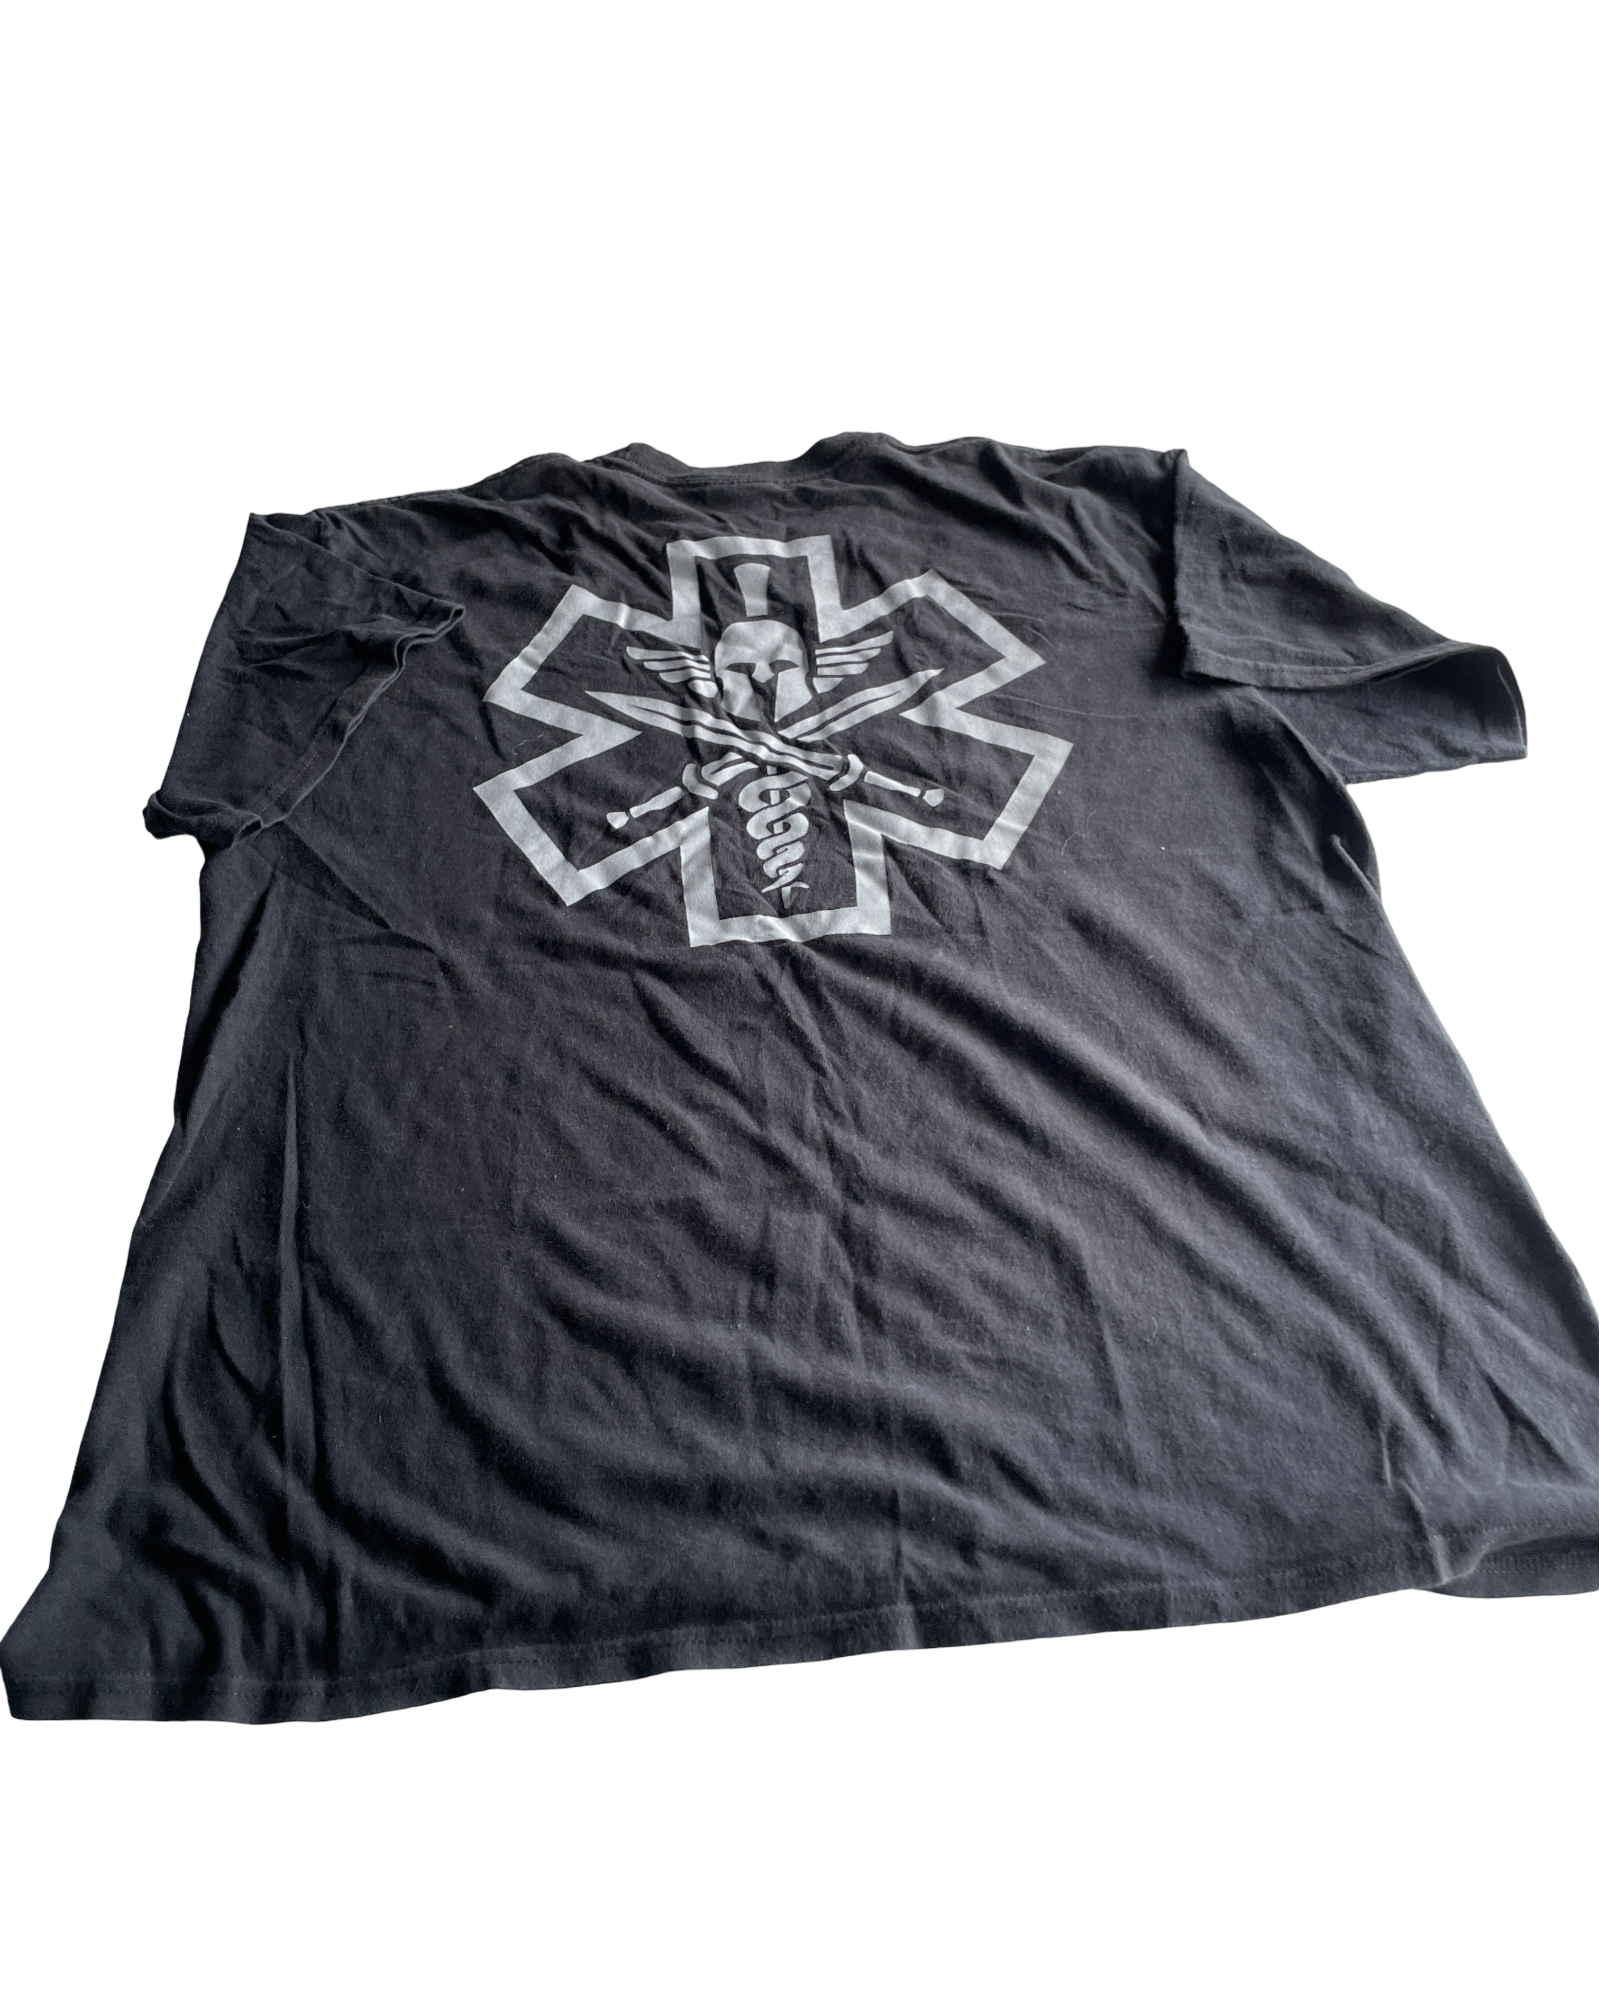 Vintage Black Casual Graphic T-Shirt - Size XL (SKU 4617)